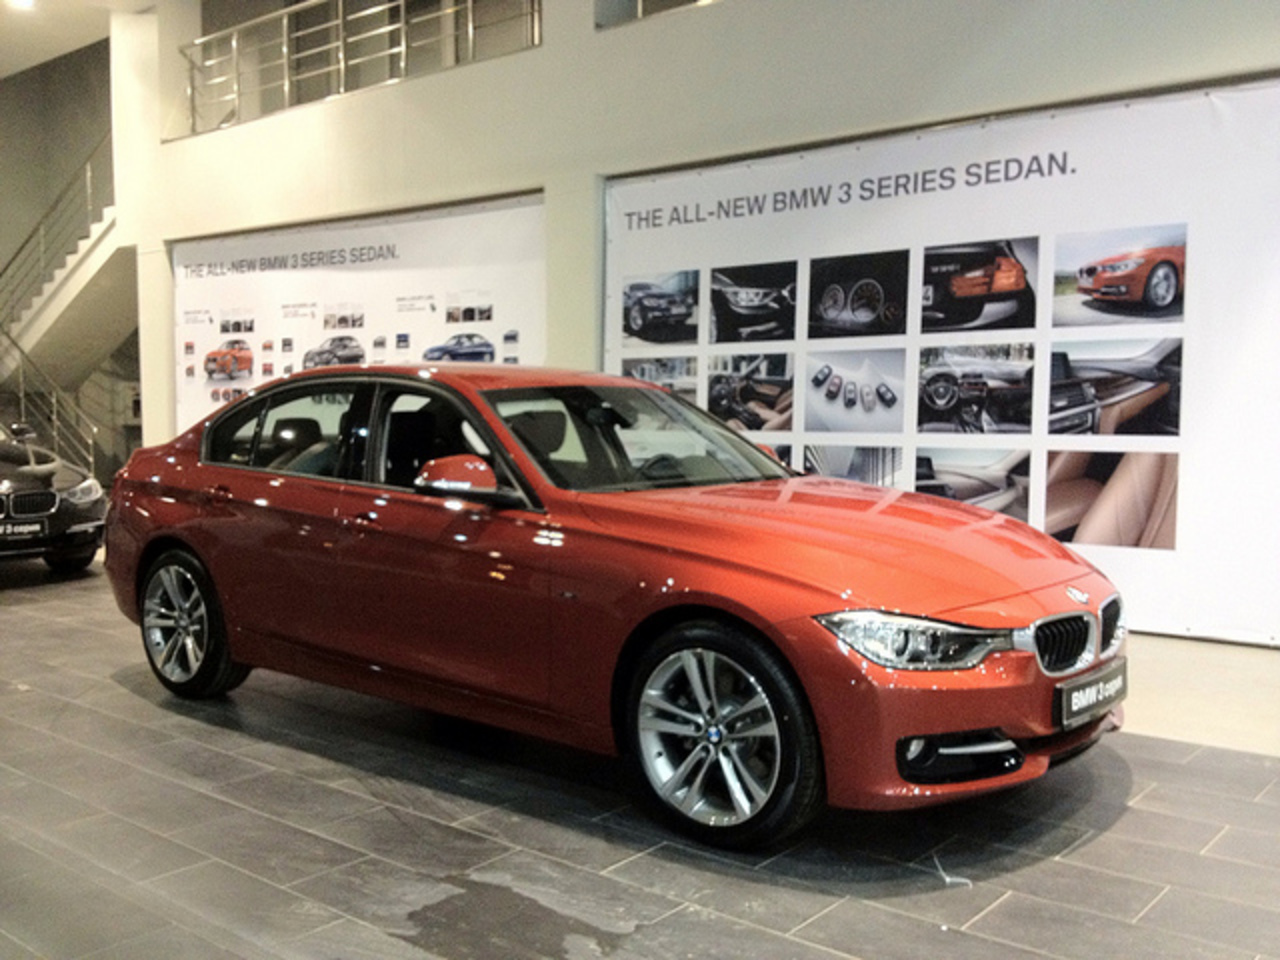 BMW série 3 2012 / Flickr - Partage de photos!